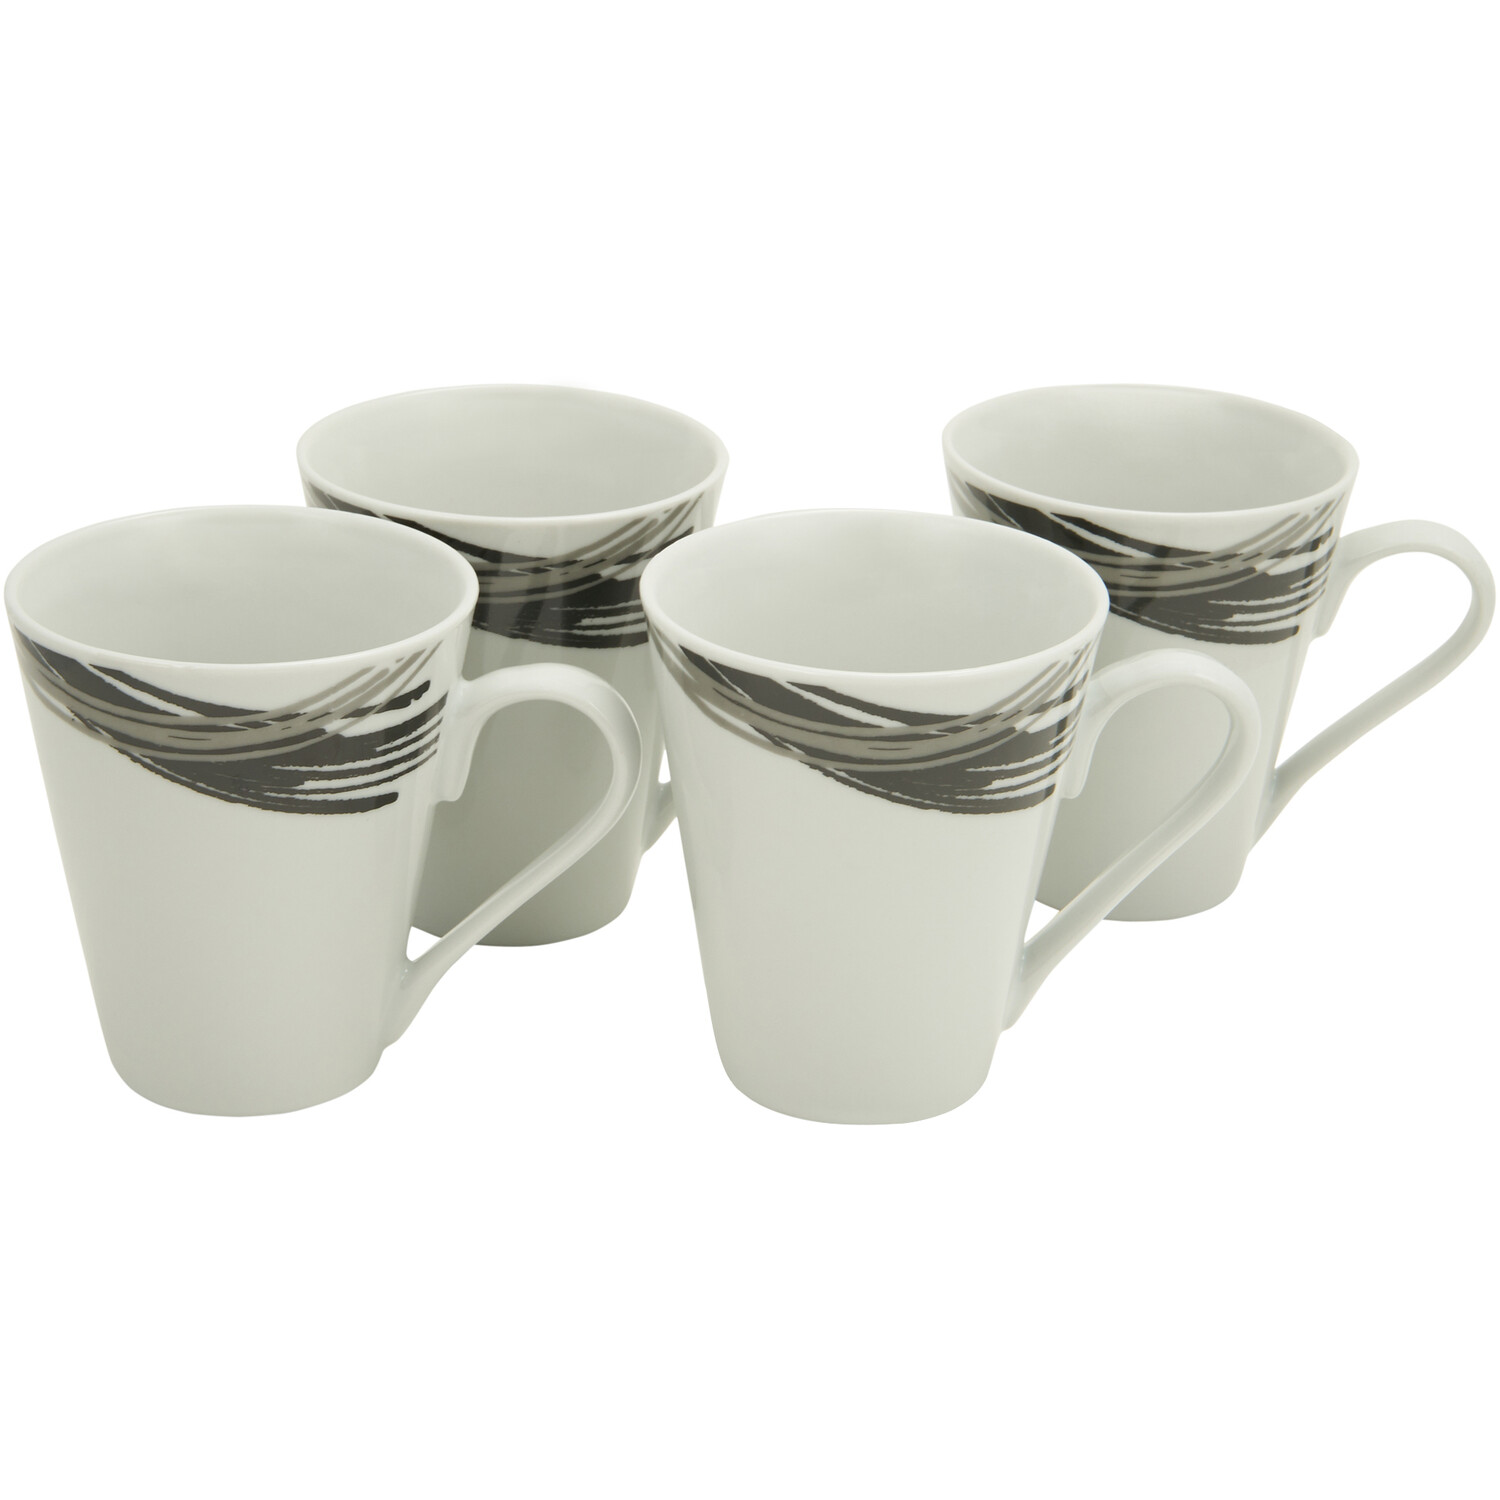 Pack of 4 Stria Mugs - White Image 1